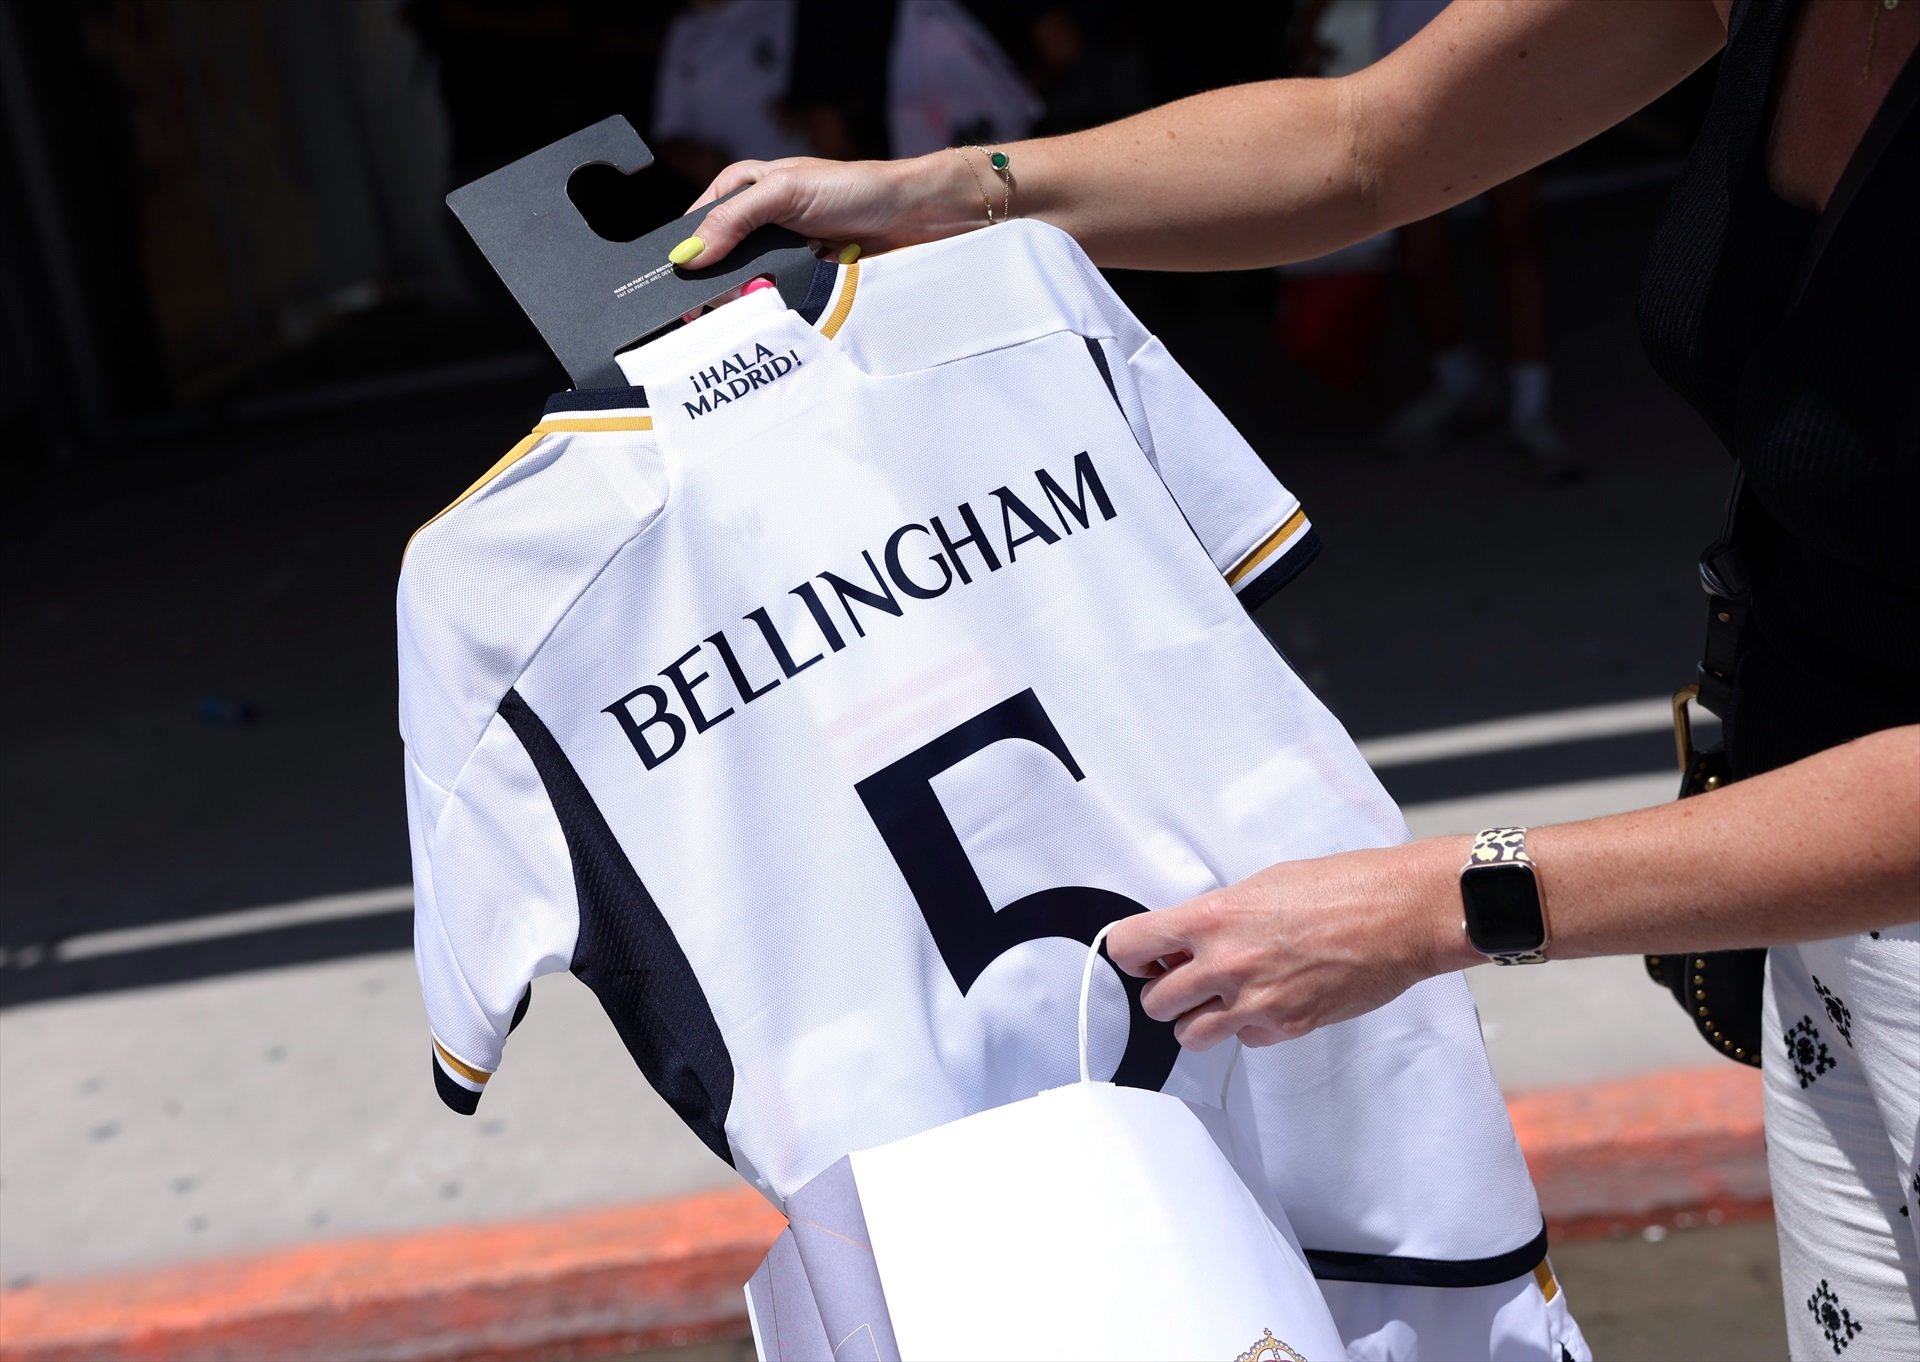 Bellingham deja la primera víctima en el Real Madrid, estudia activar la cláusula de escape